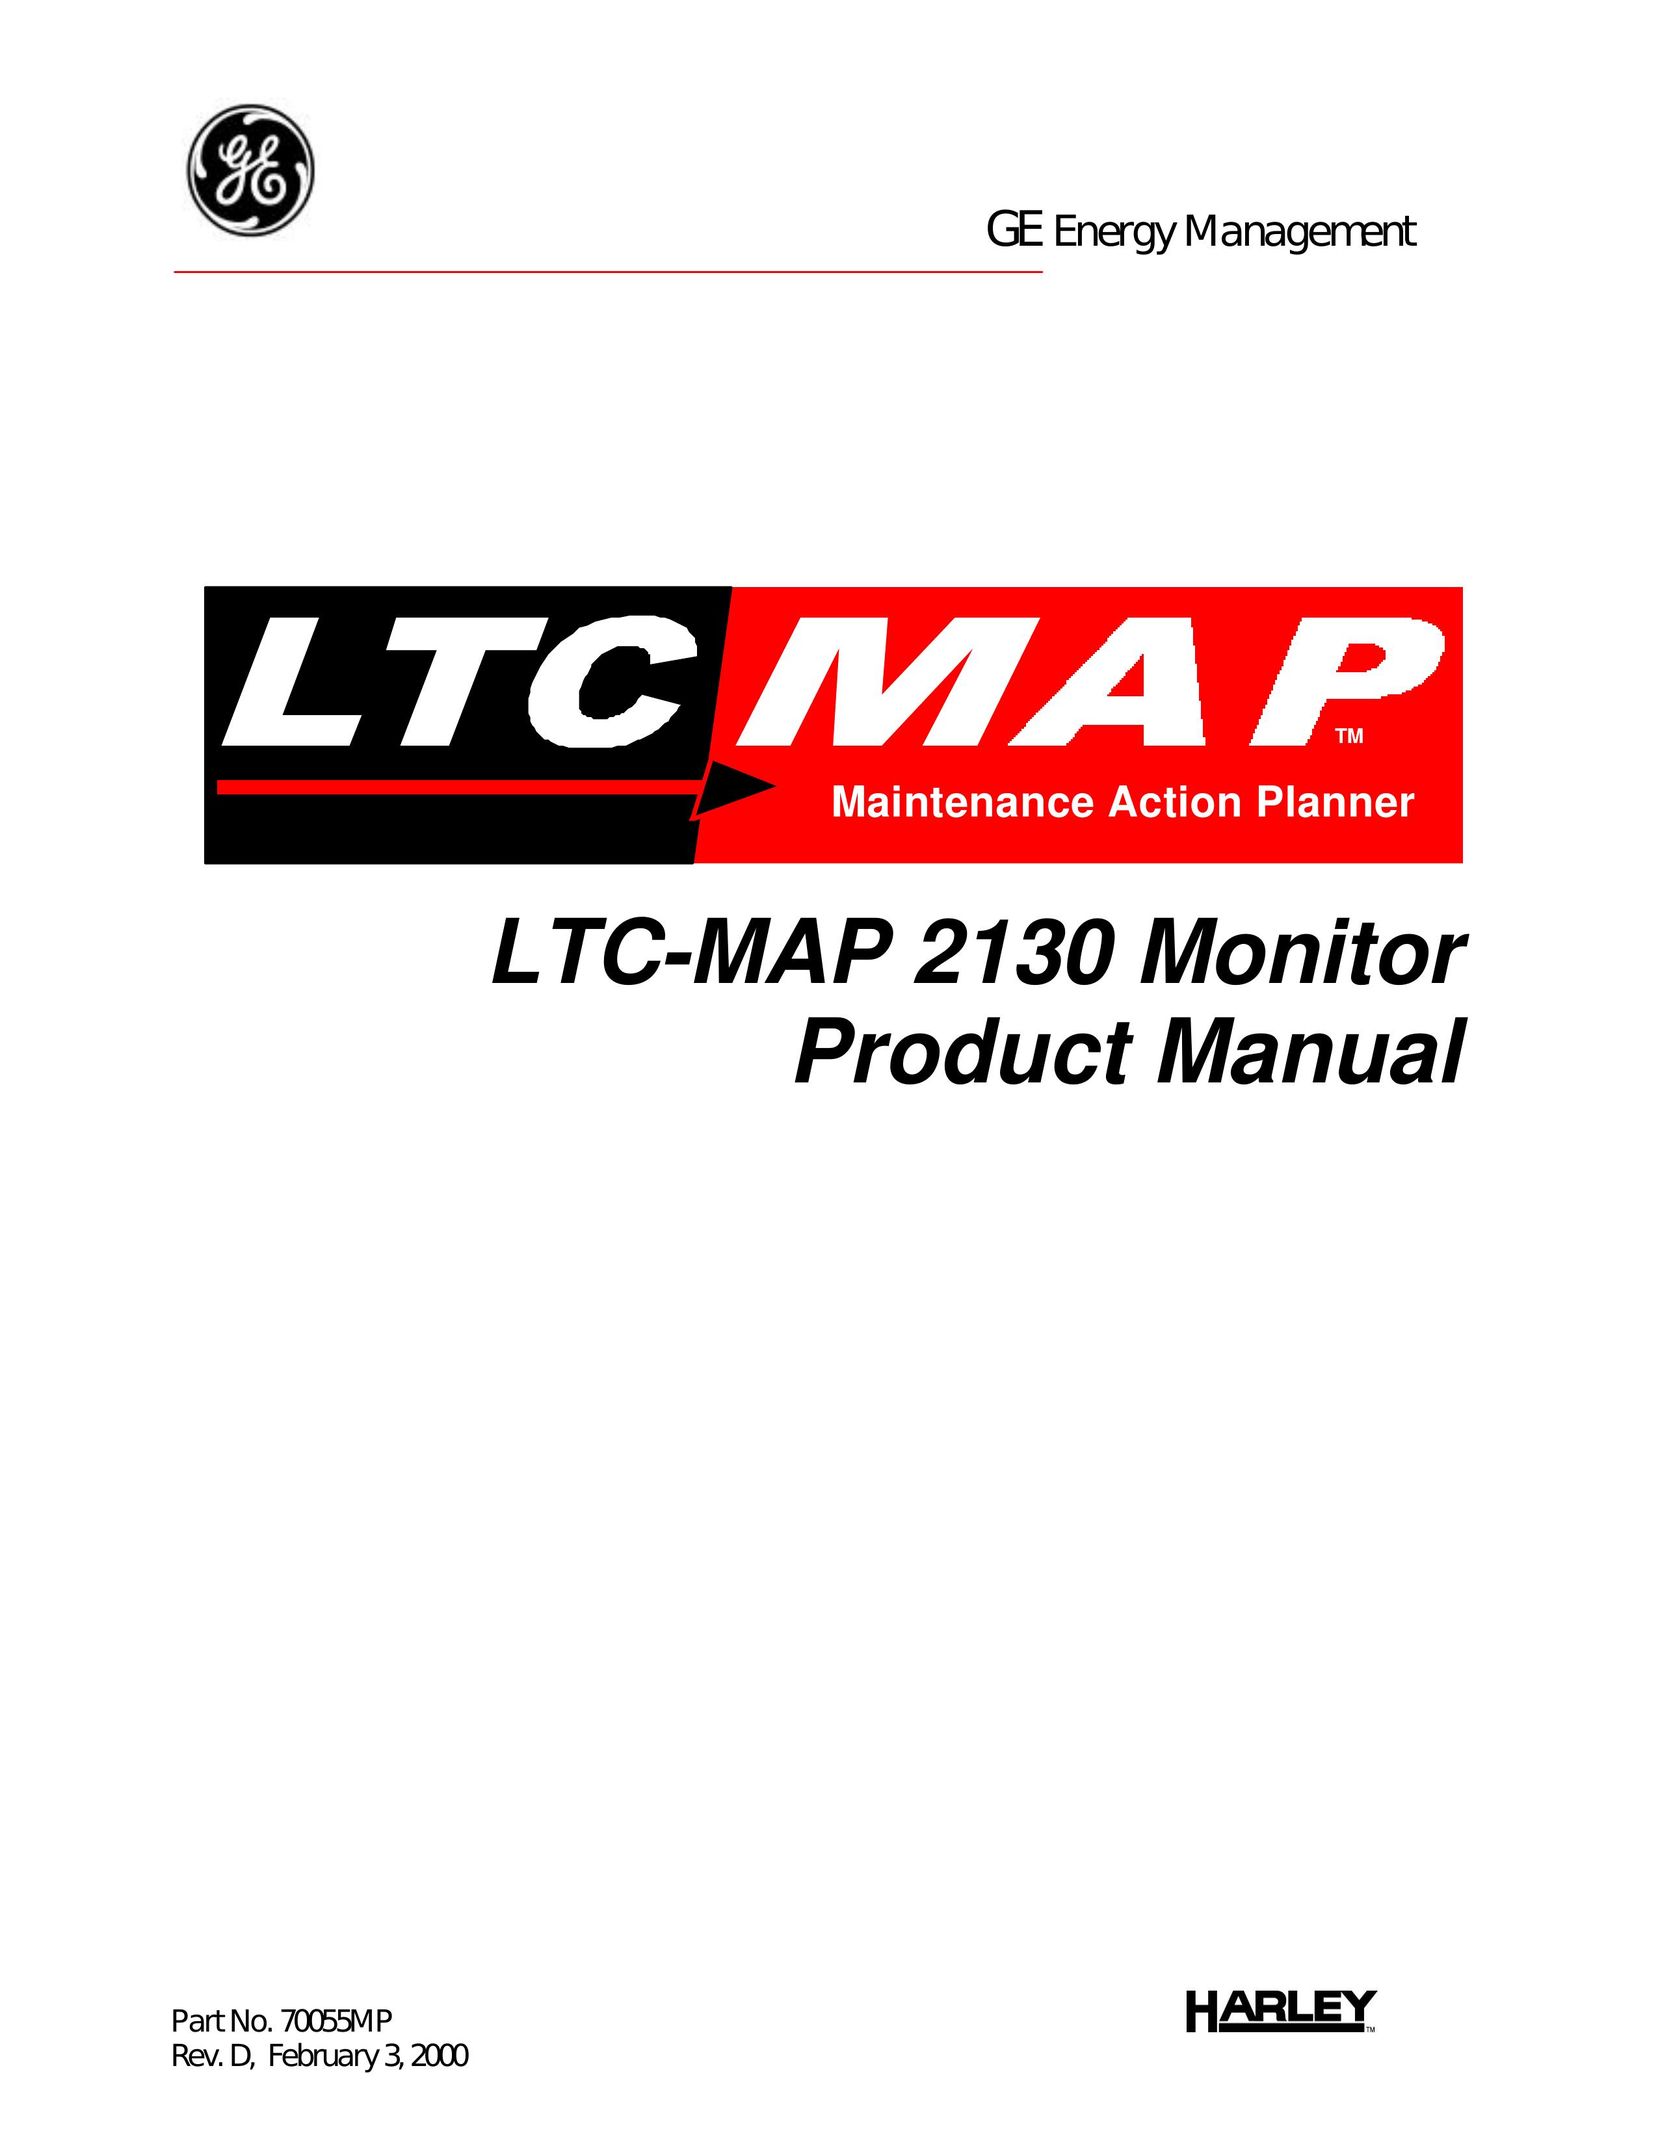 GE LTC-MAP 2130 Computer Monitor User Manual